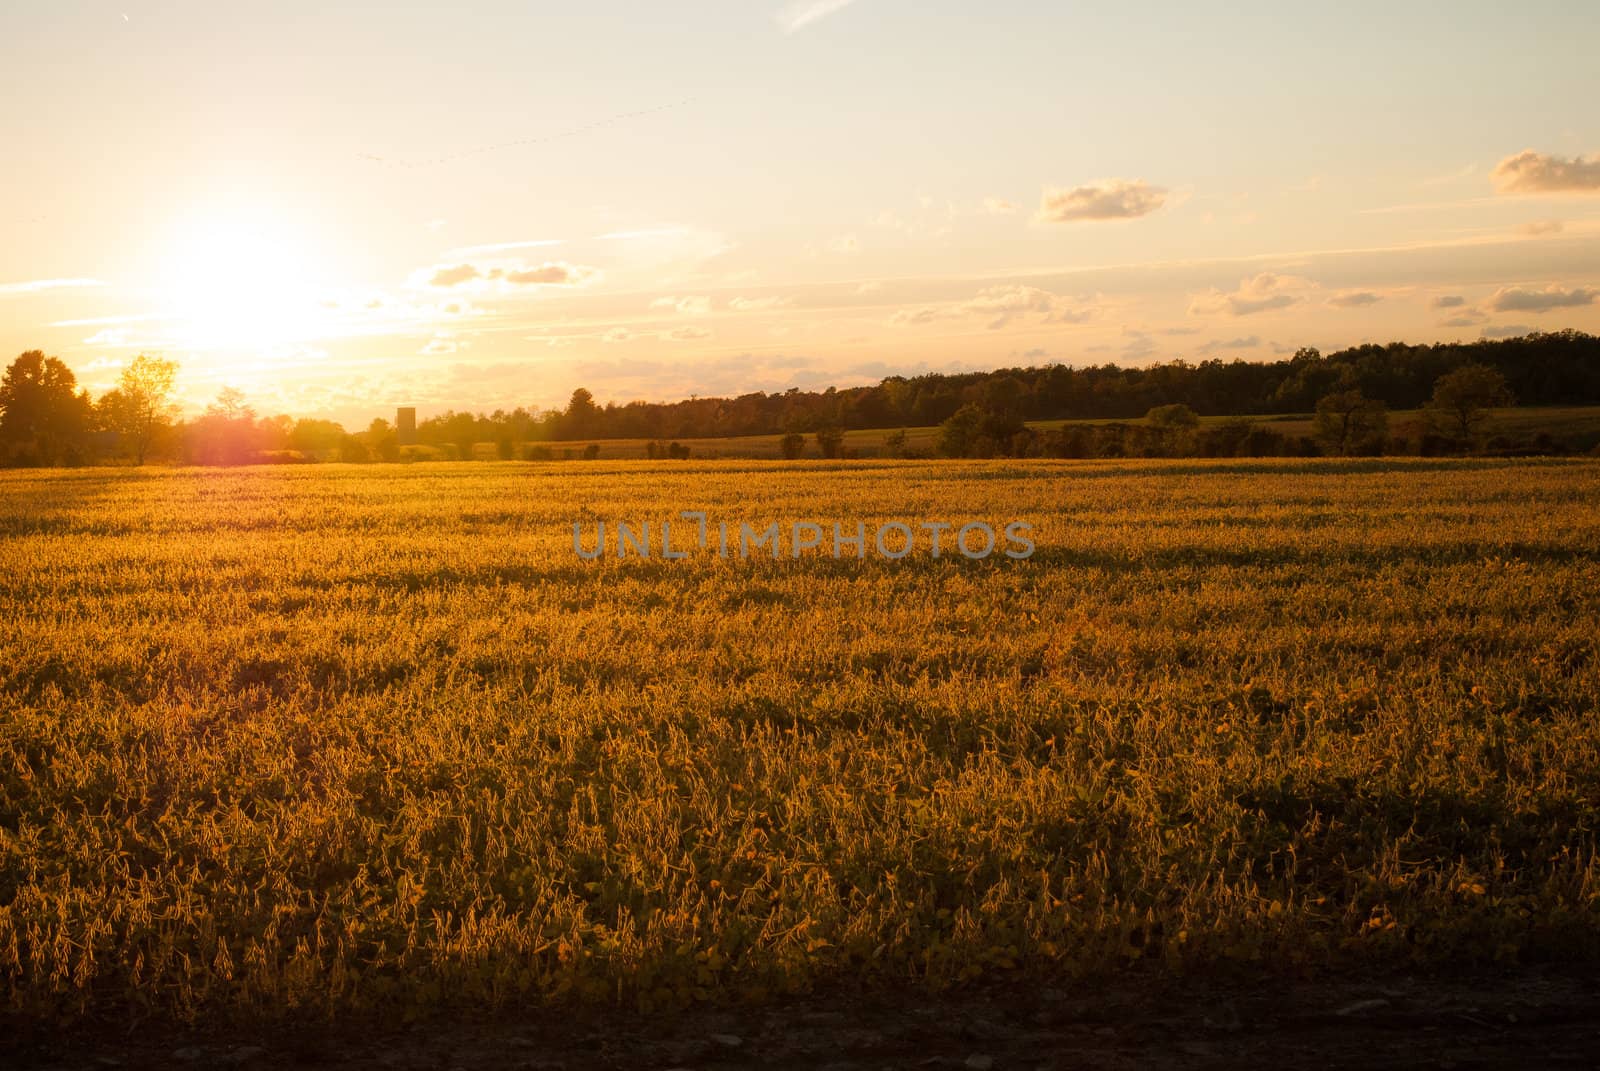 Photograph of the setting sun crosslighting an agricultural field near Buffalo New York.